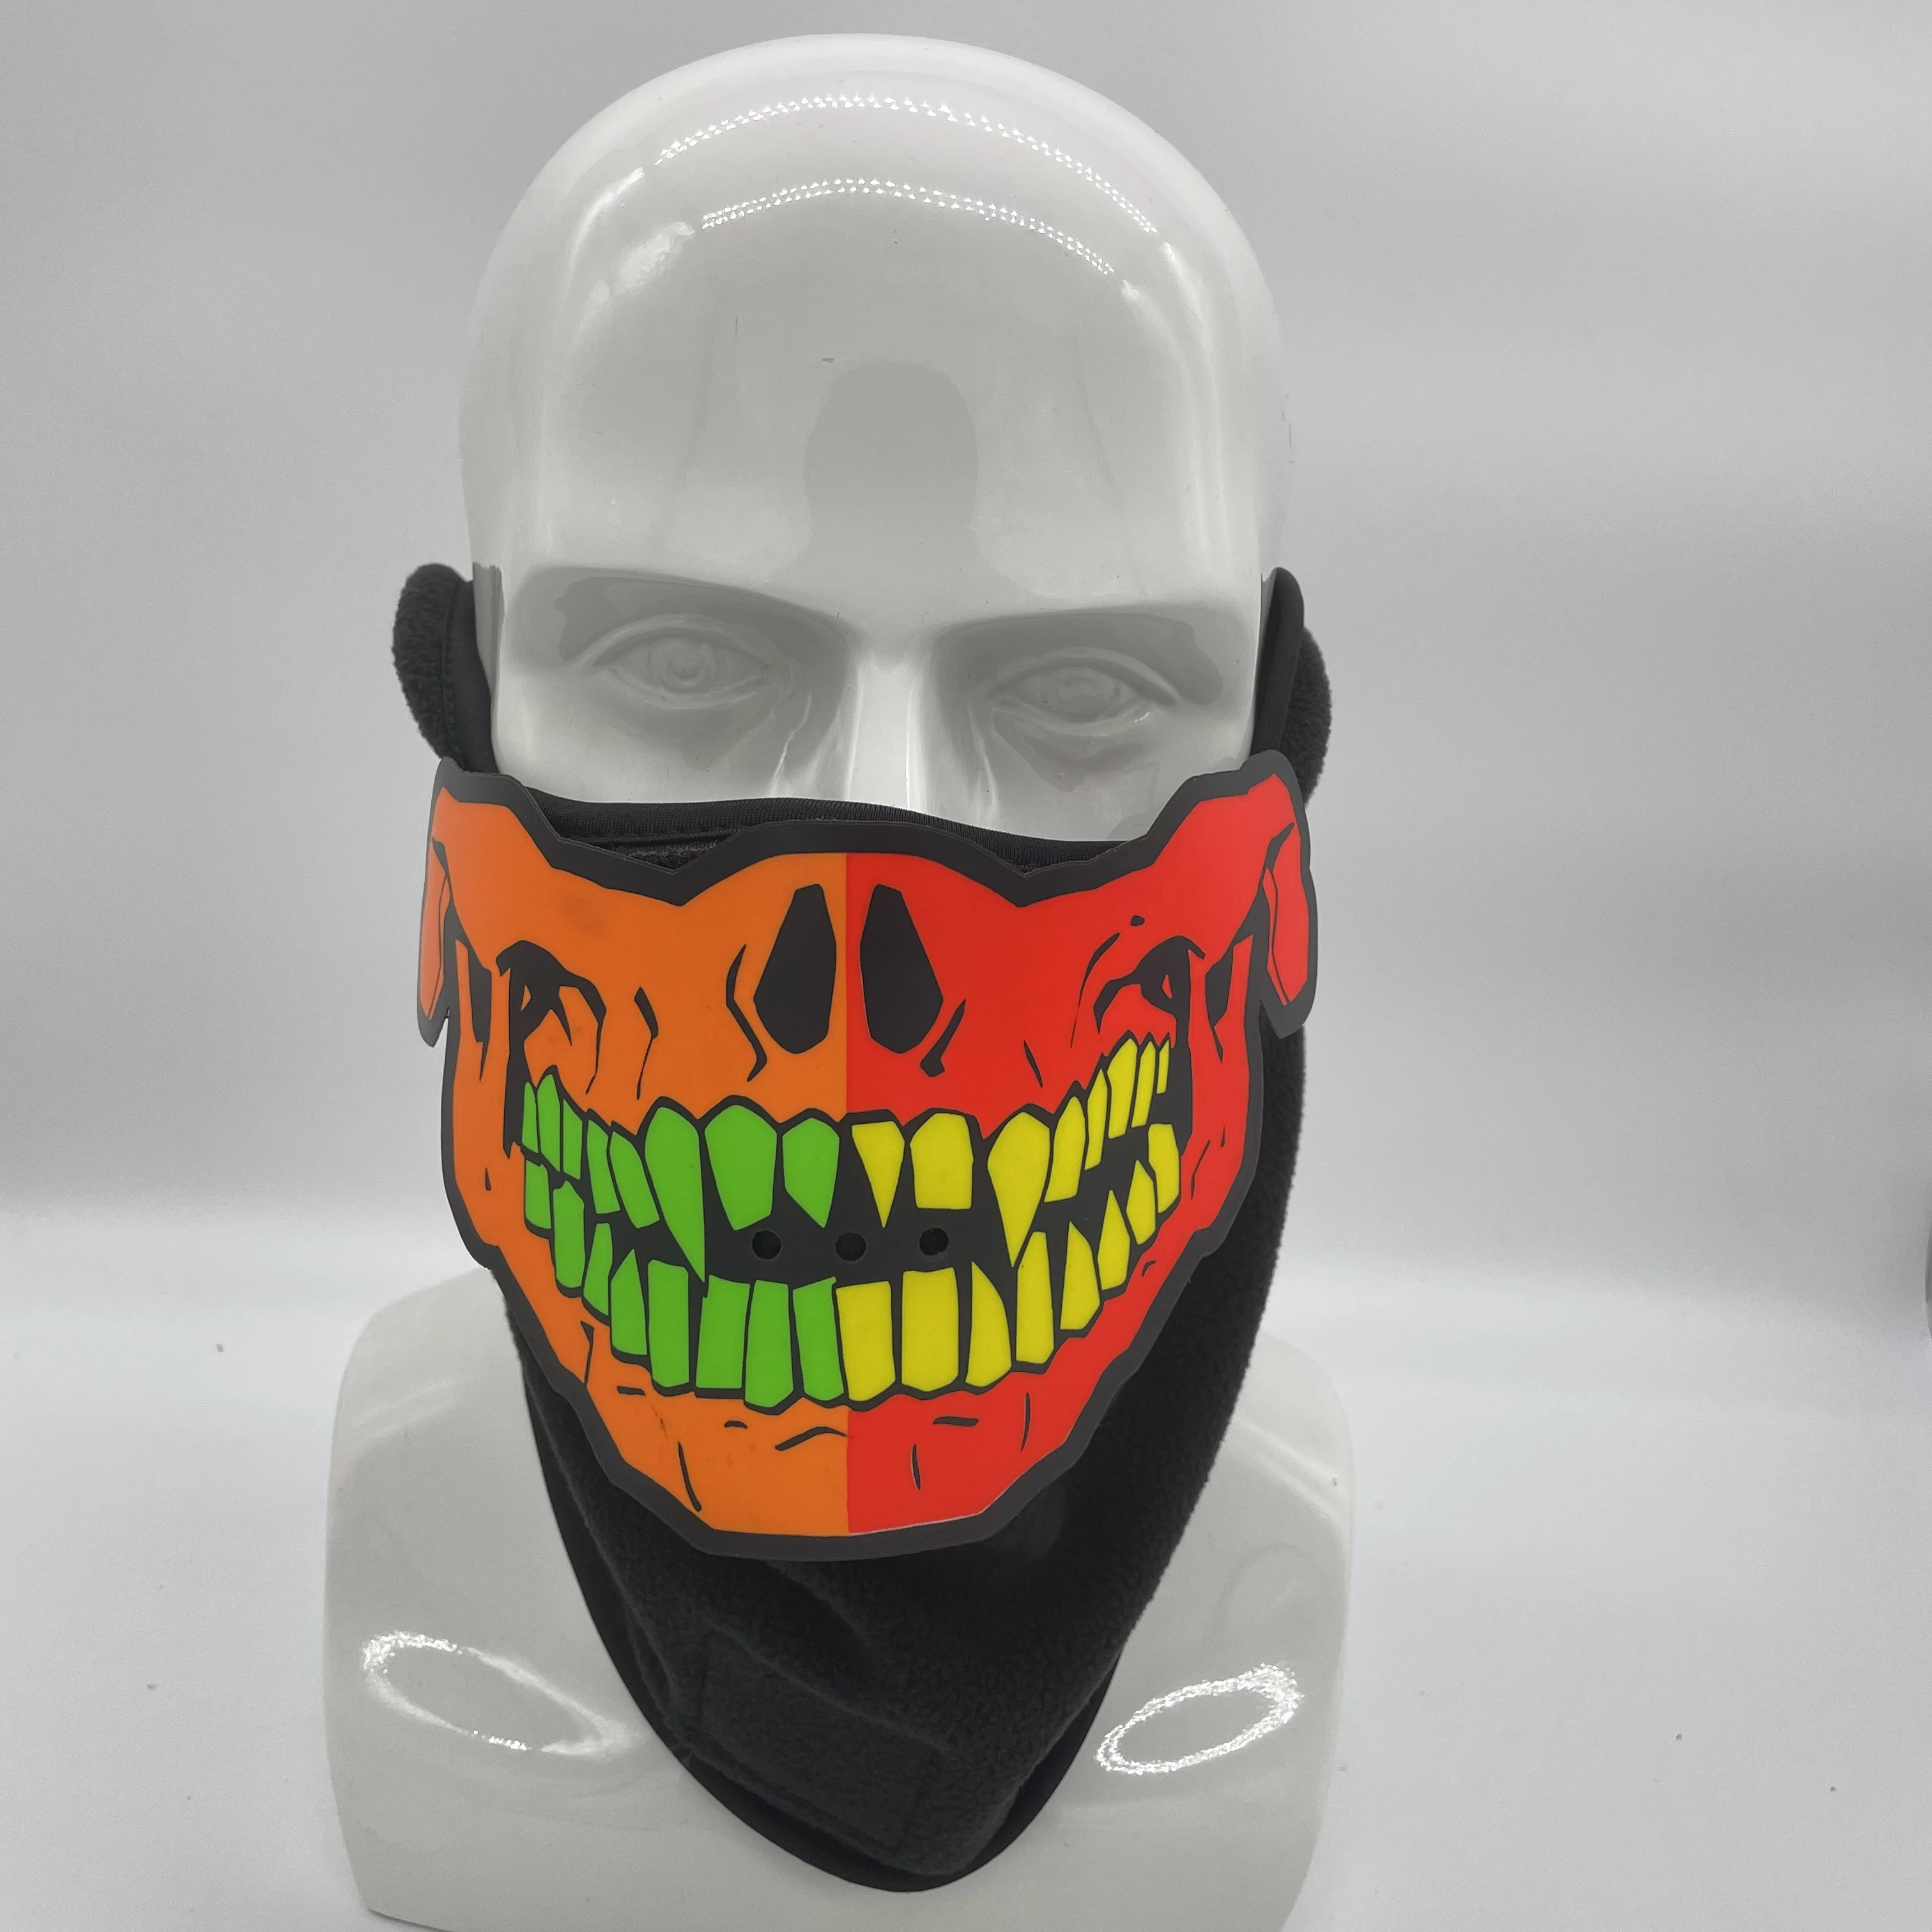 Wholesale LED Light Up Mask Subzero Sound Reactive Cyberpunk Edc Rave Festival Halloween Glow Horror Face From m.alibaba.com